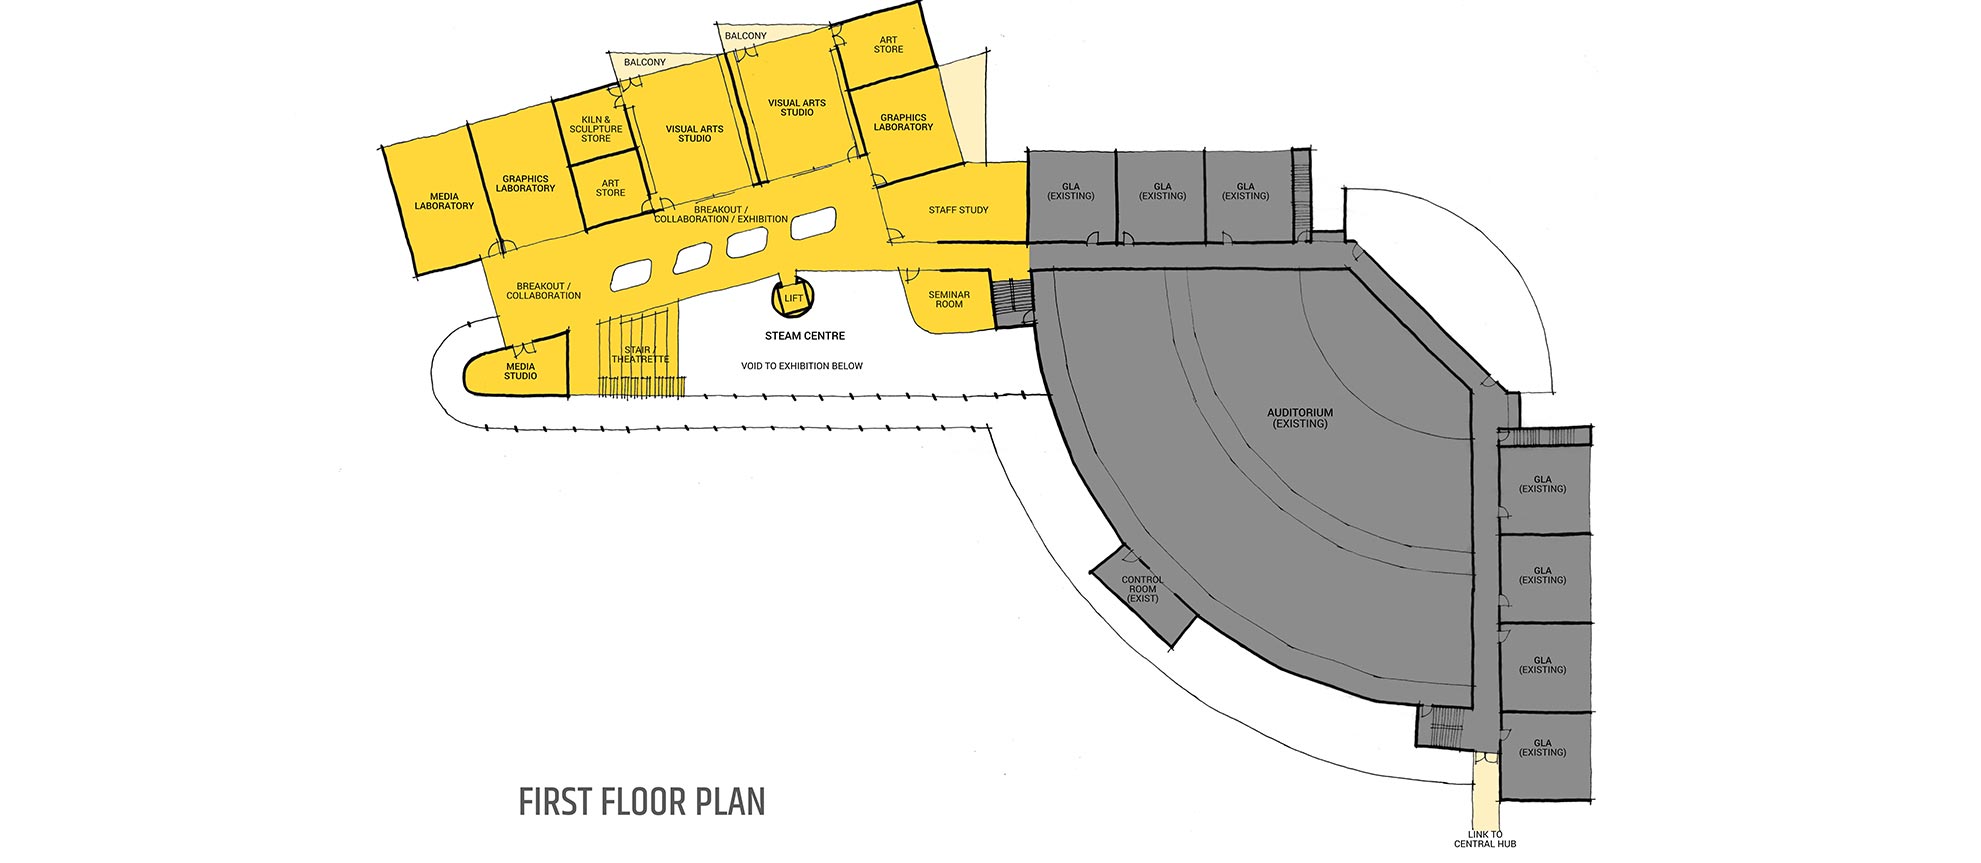 College Master Plan view of the auditorium